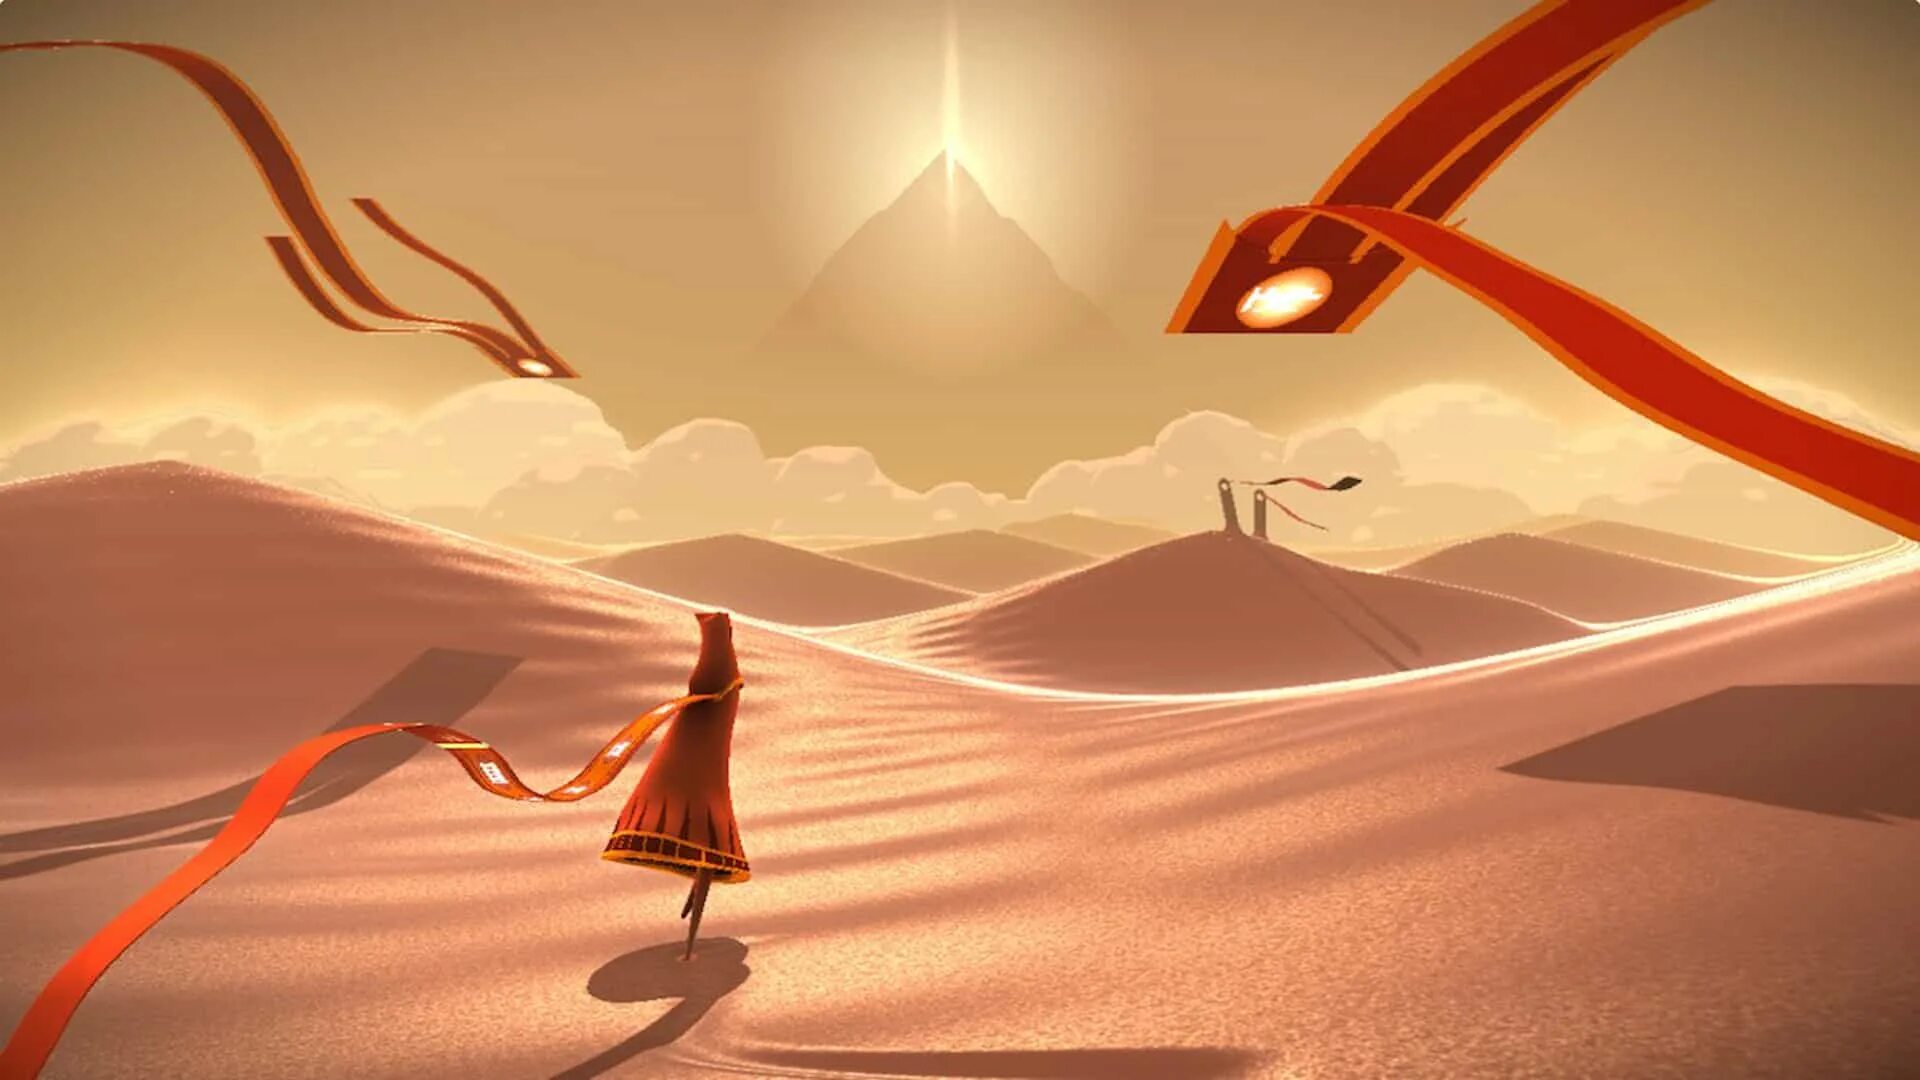 Journey гайд. Journey игра thatgamecompany. Journey (игра, 2012). Джорни путешествие игра. Пустыня из игры Джорни.